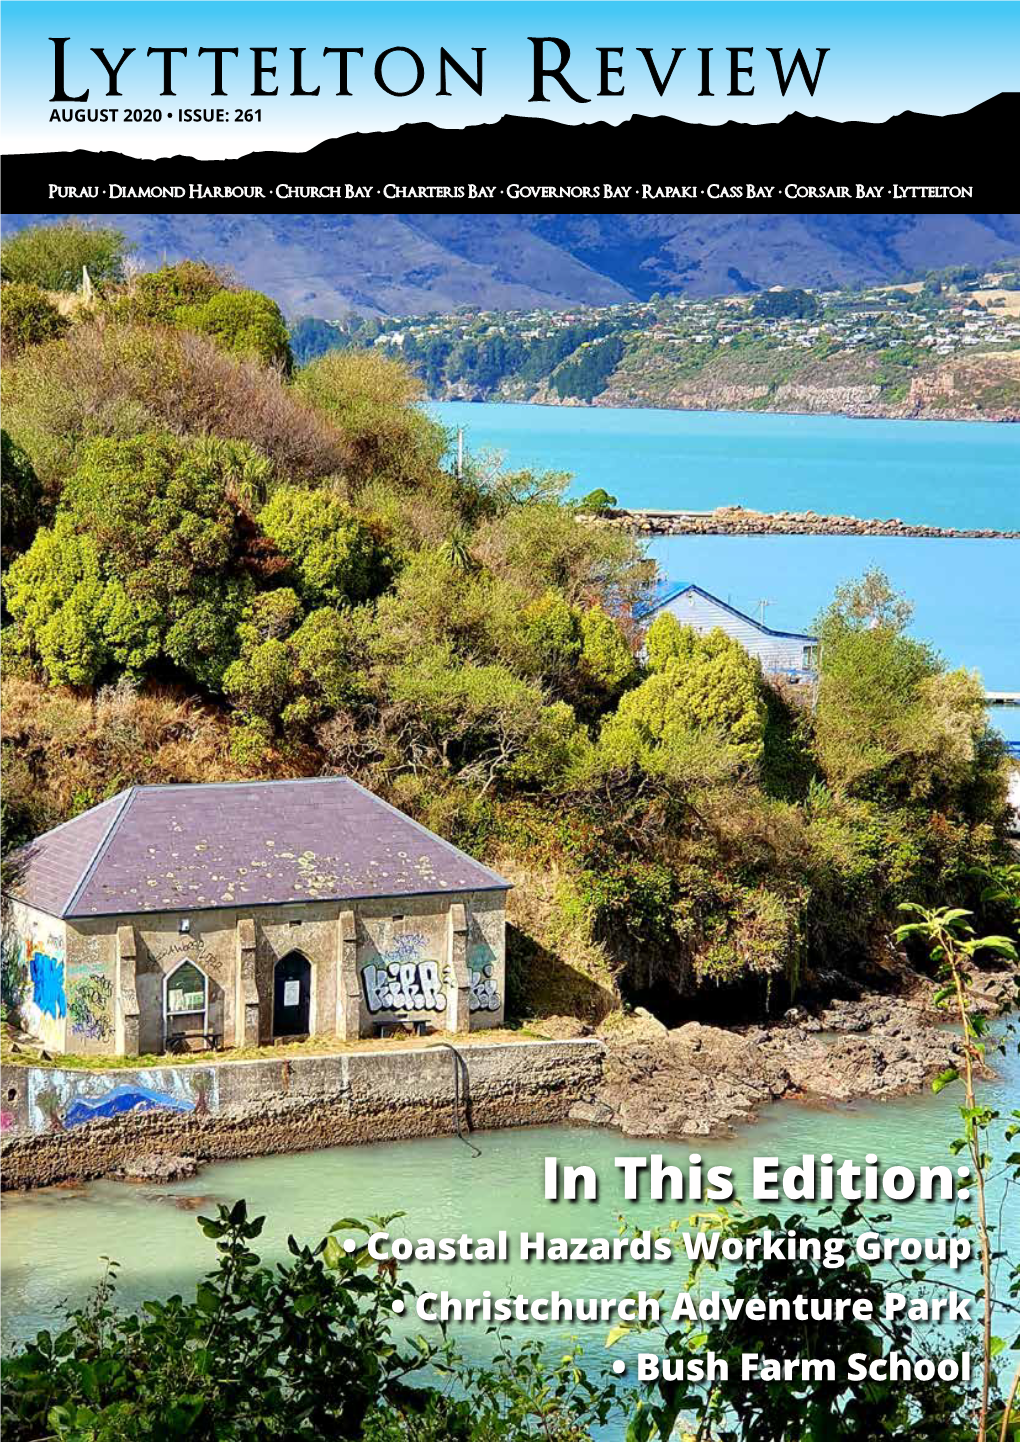 In This Edition: • Coastal Hazards Working Group • Christchurch Adventure Park • Bush Farm School